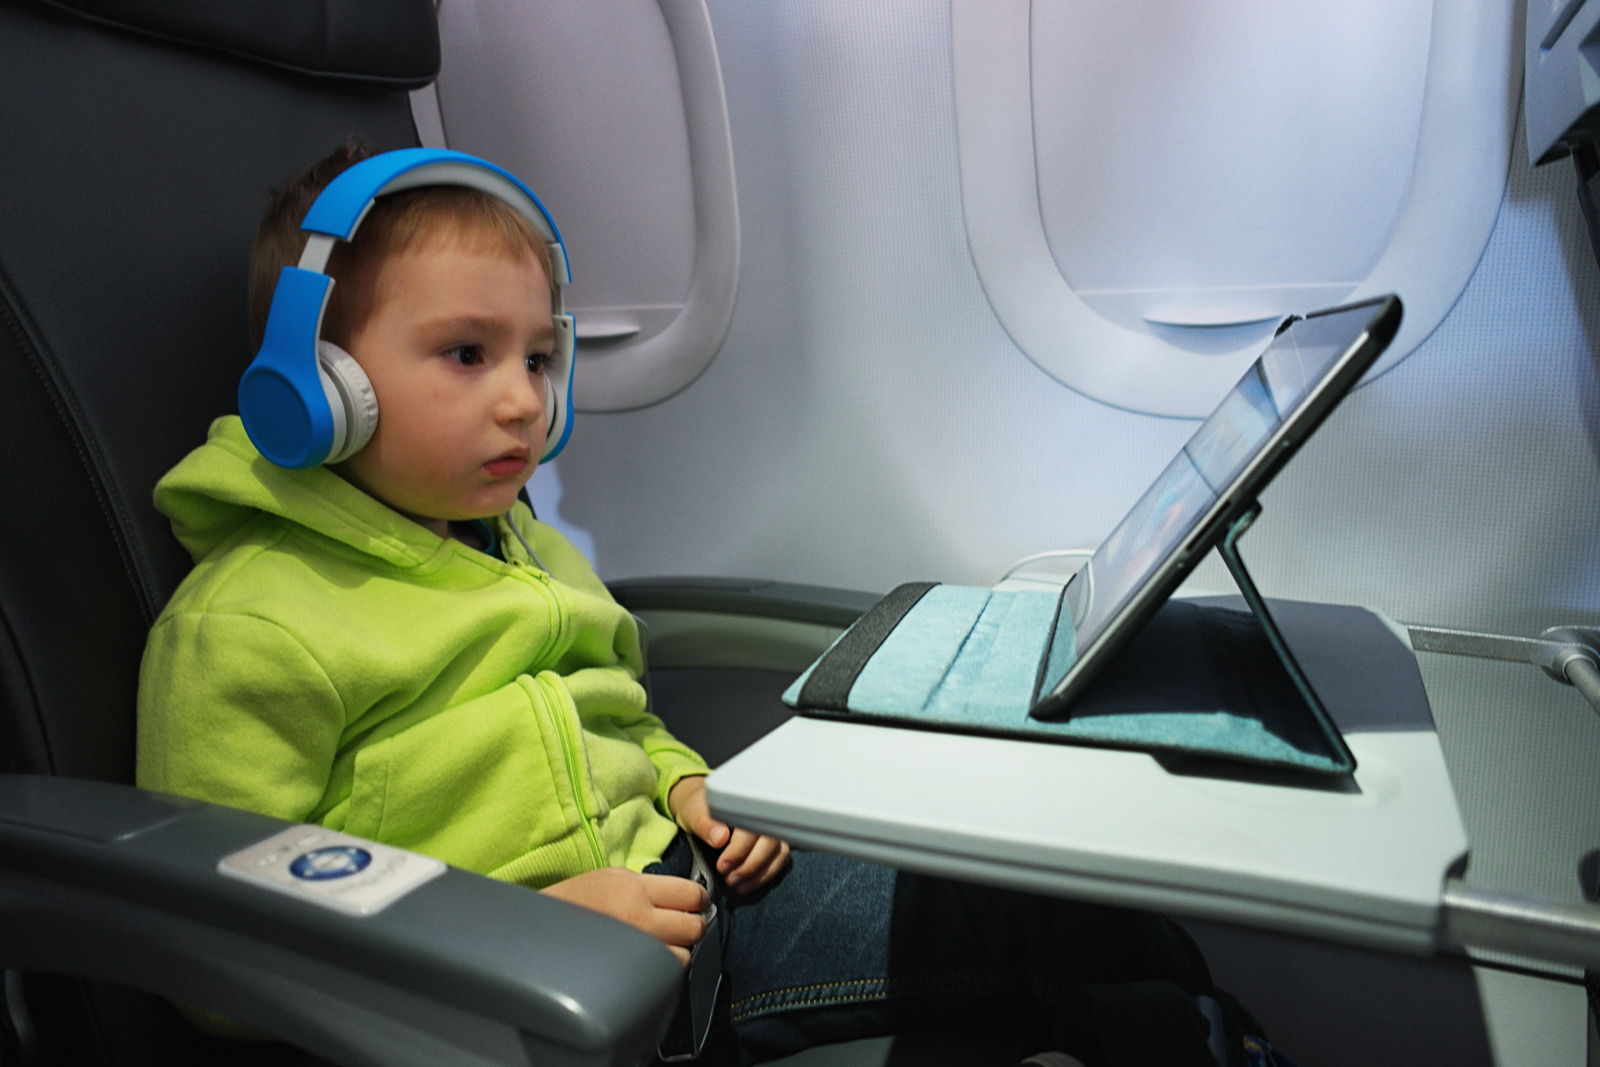 Youn boy sitting in airplane sit watching digital tablet and wearing headphones